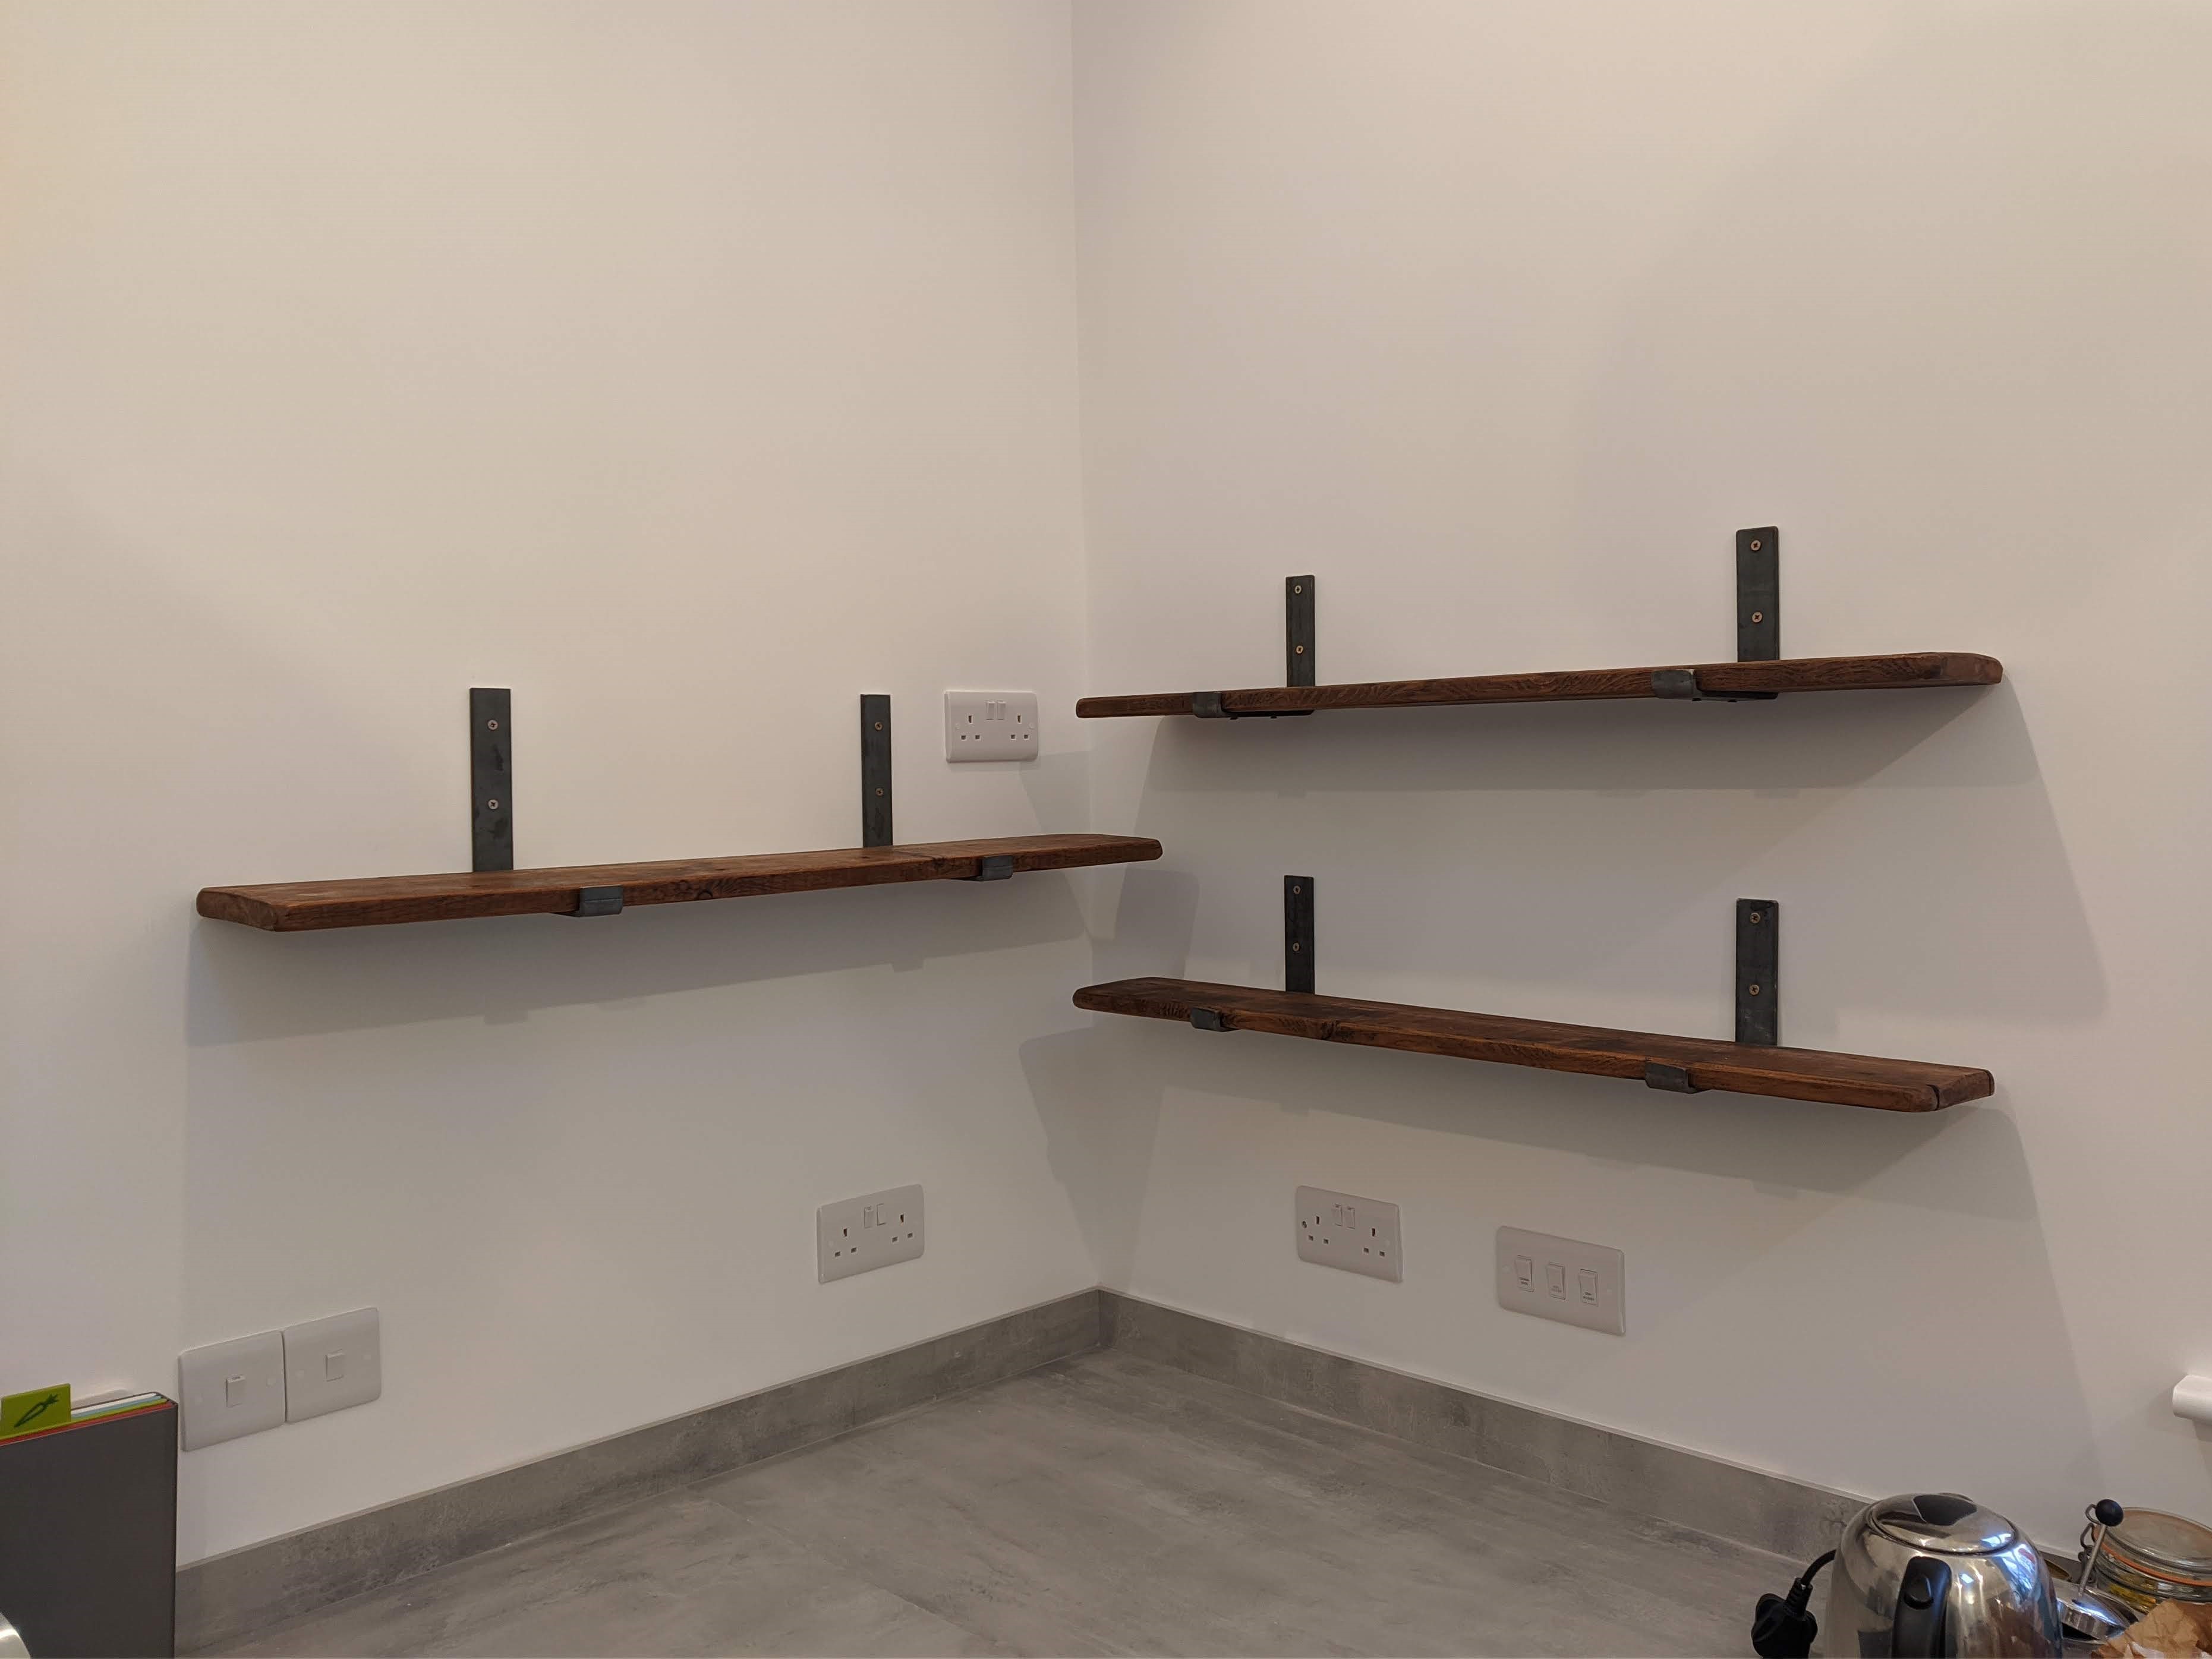 Shelves hung